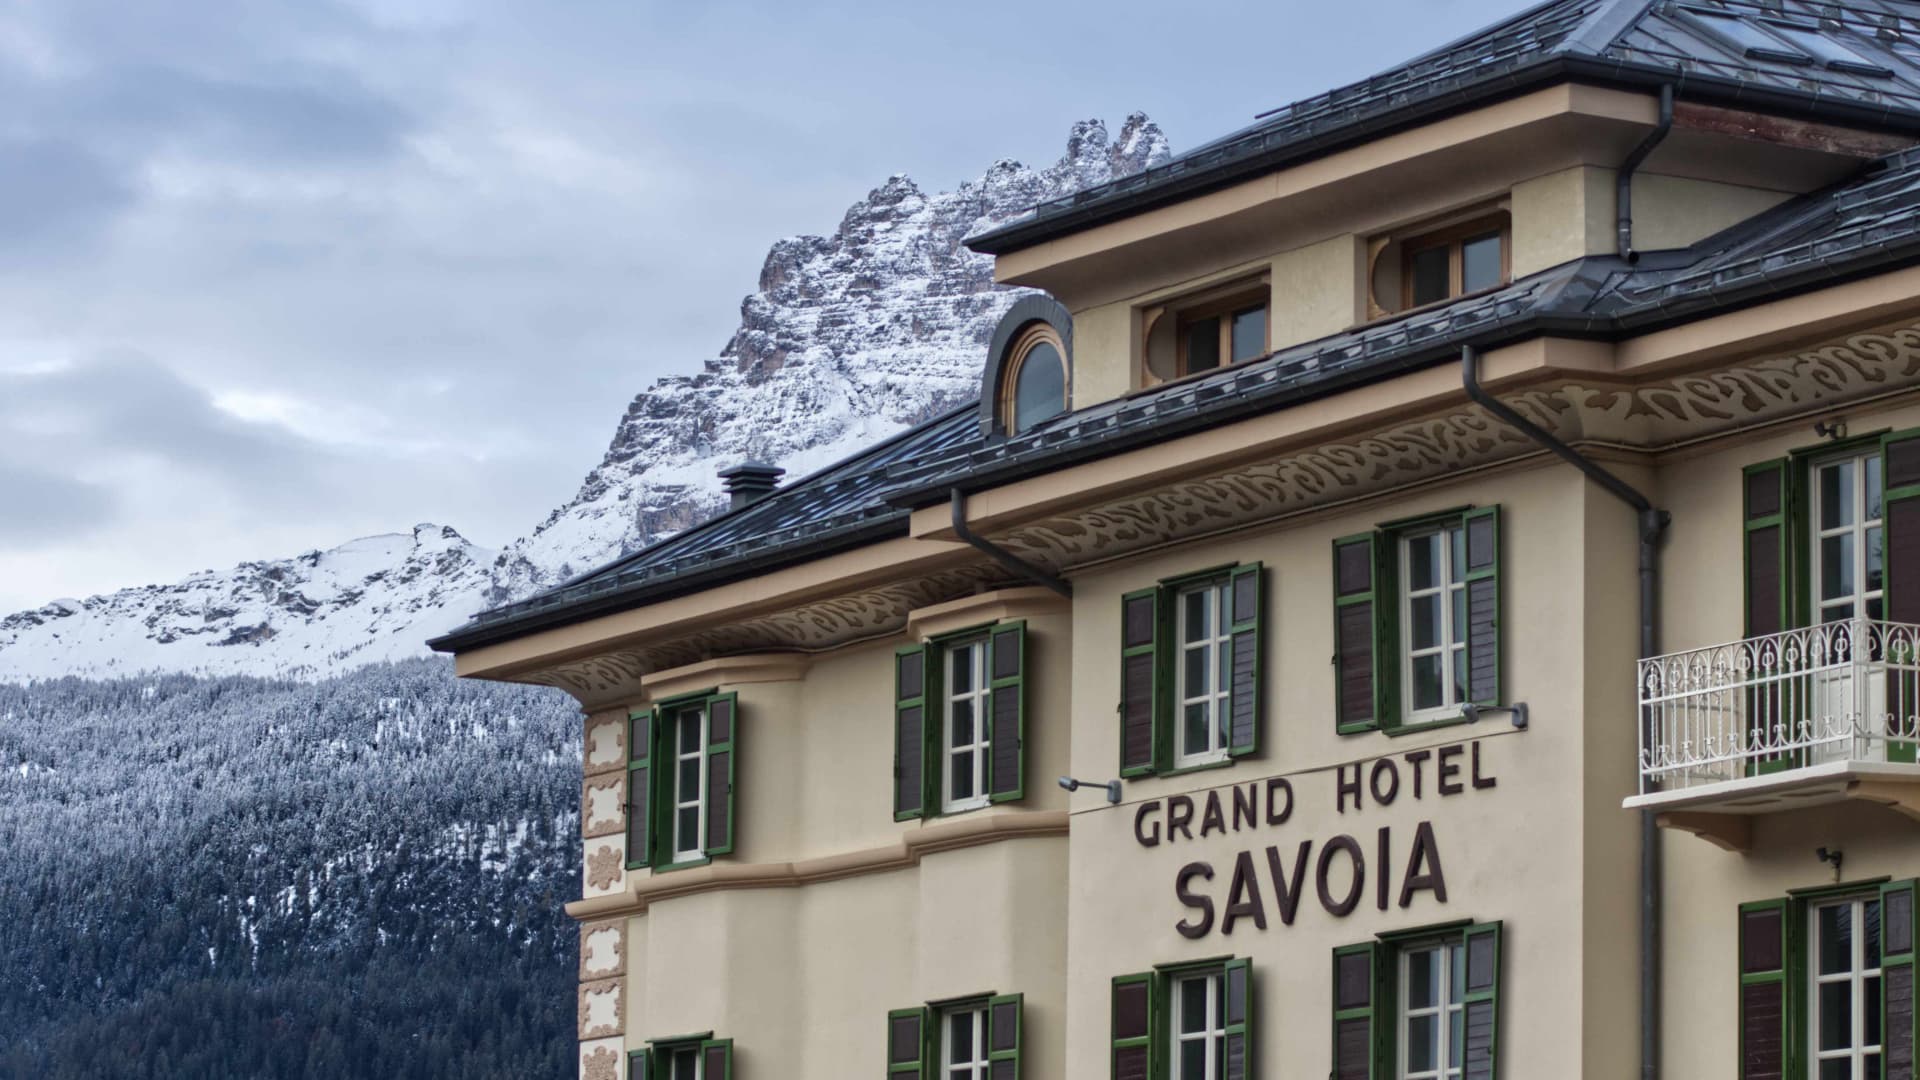 Grand Hotel Savoia - building